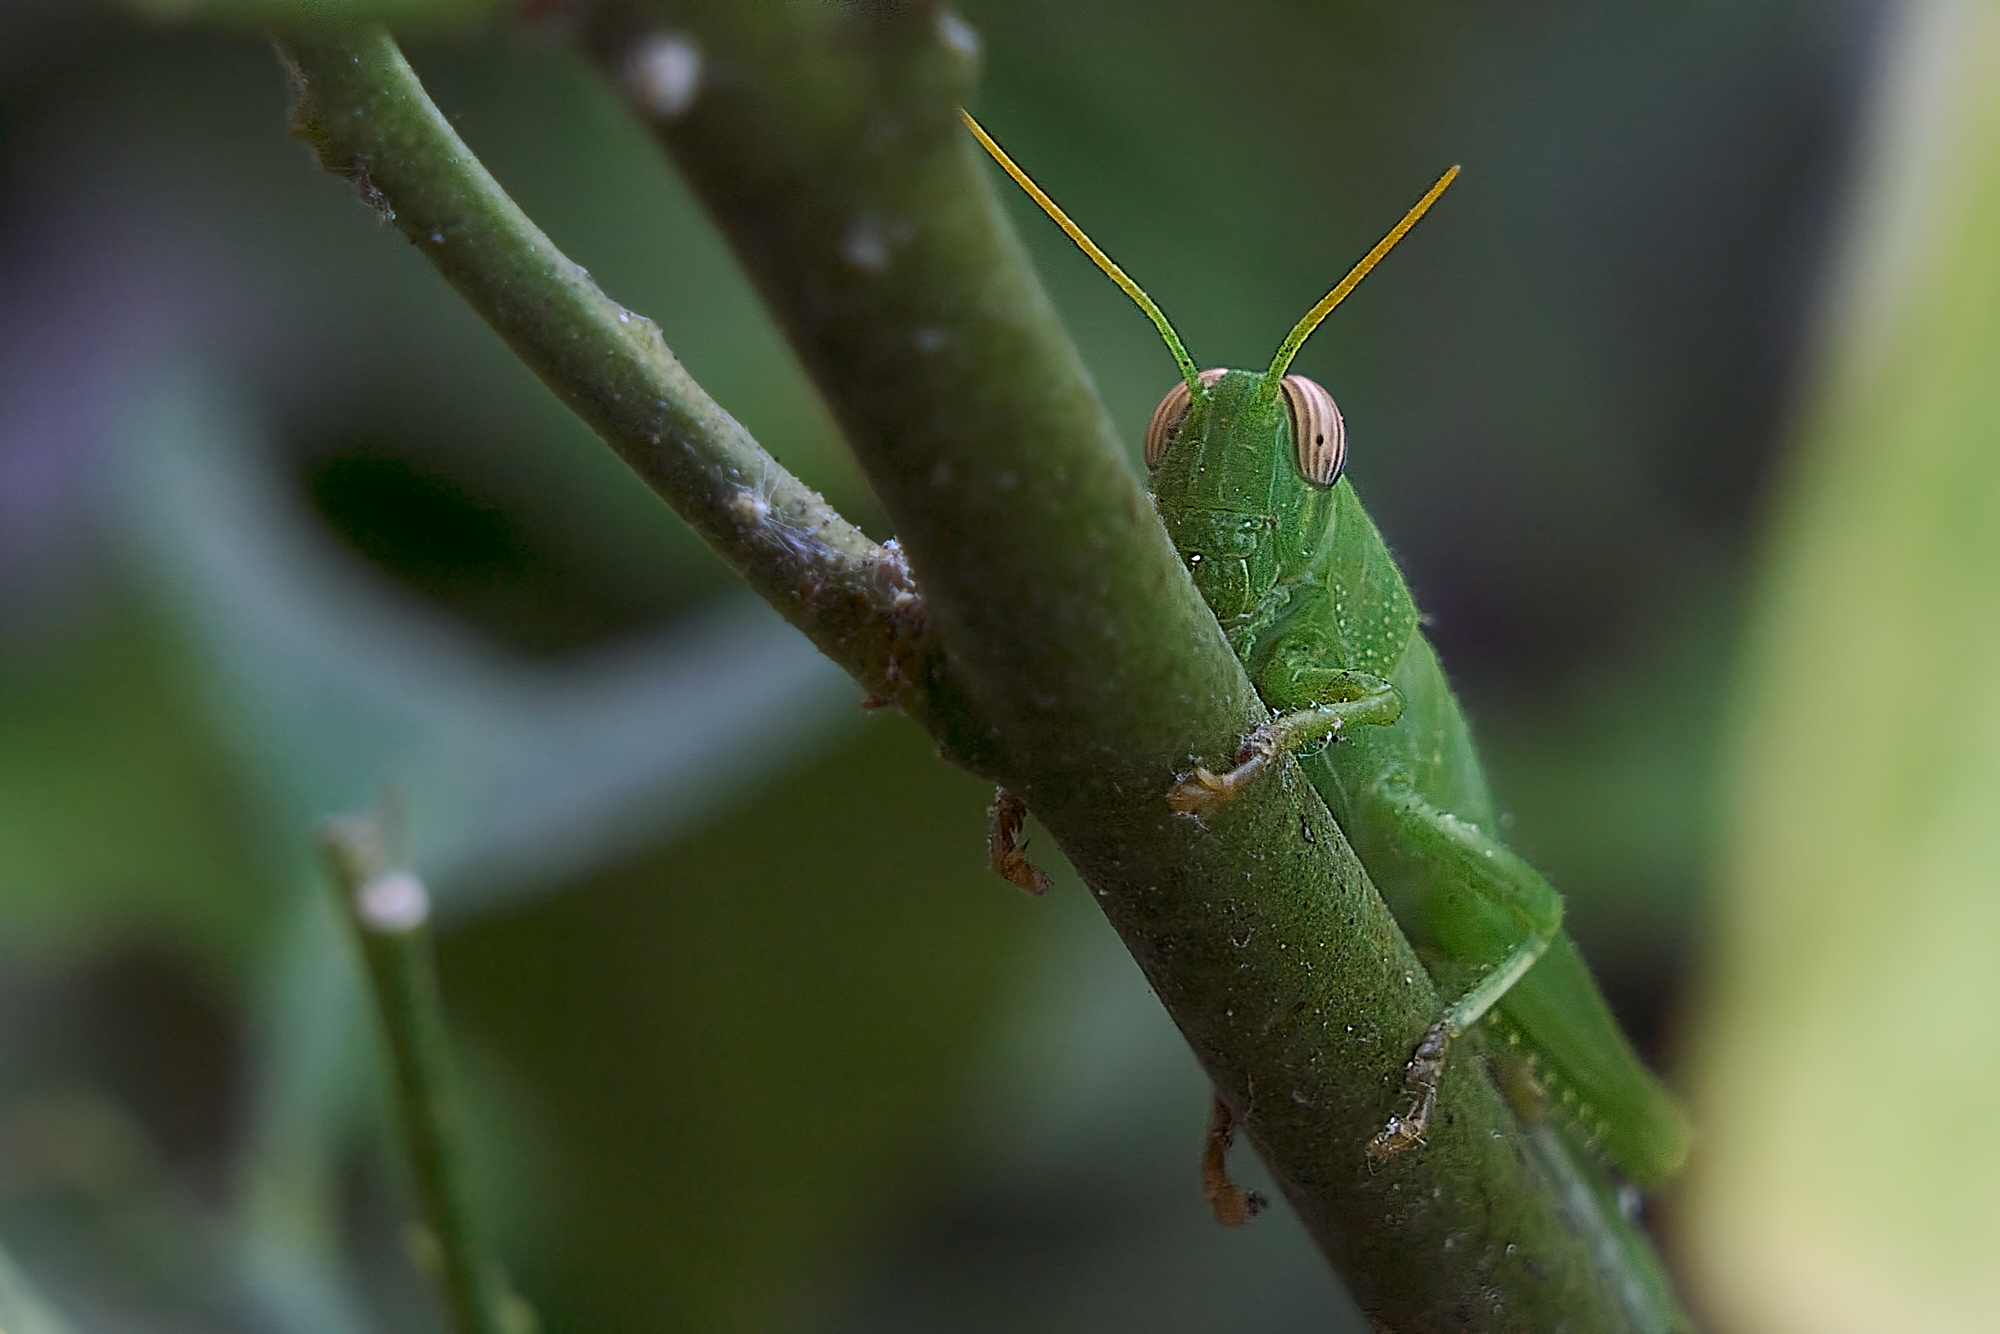 Chameleon grasshopper ...